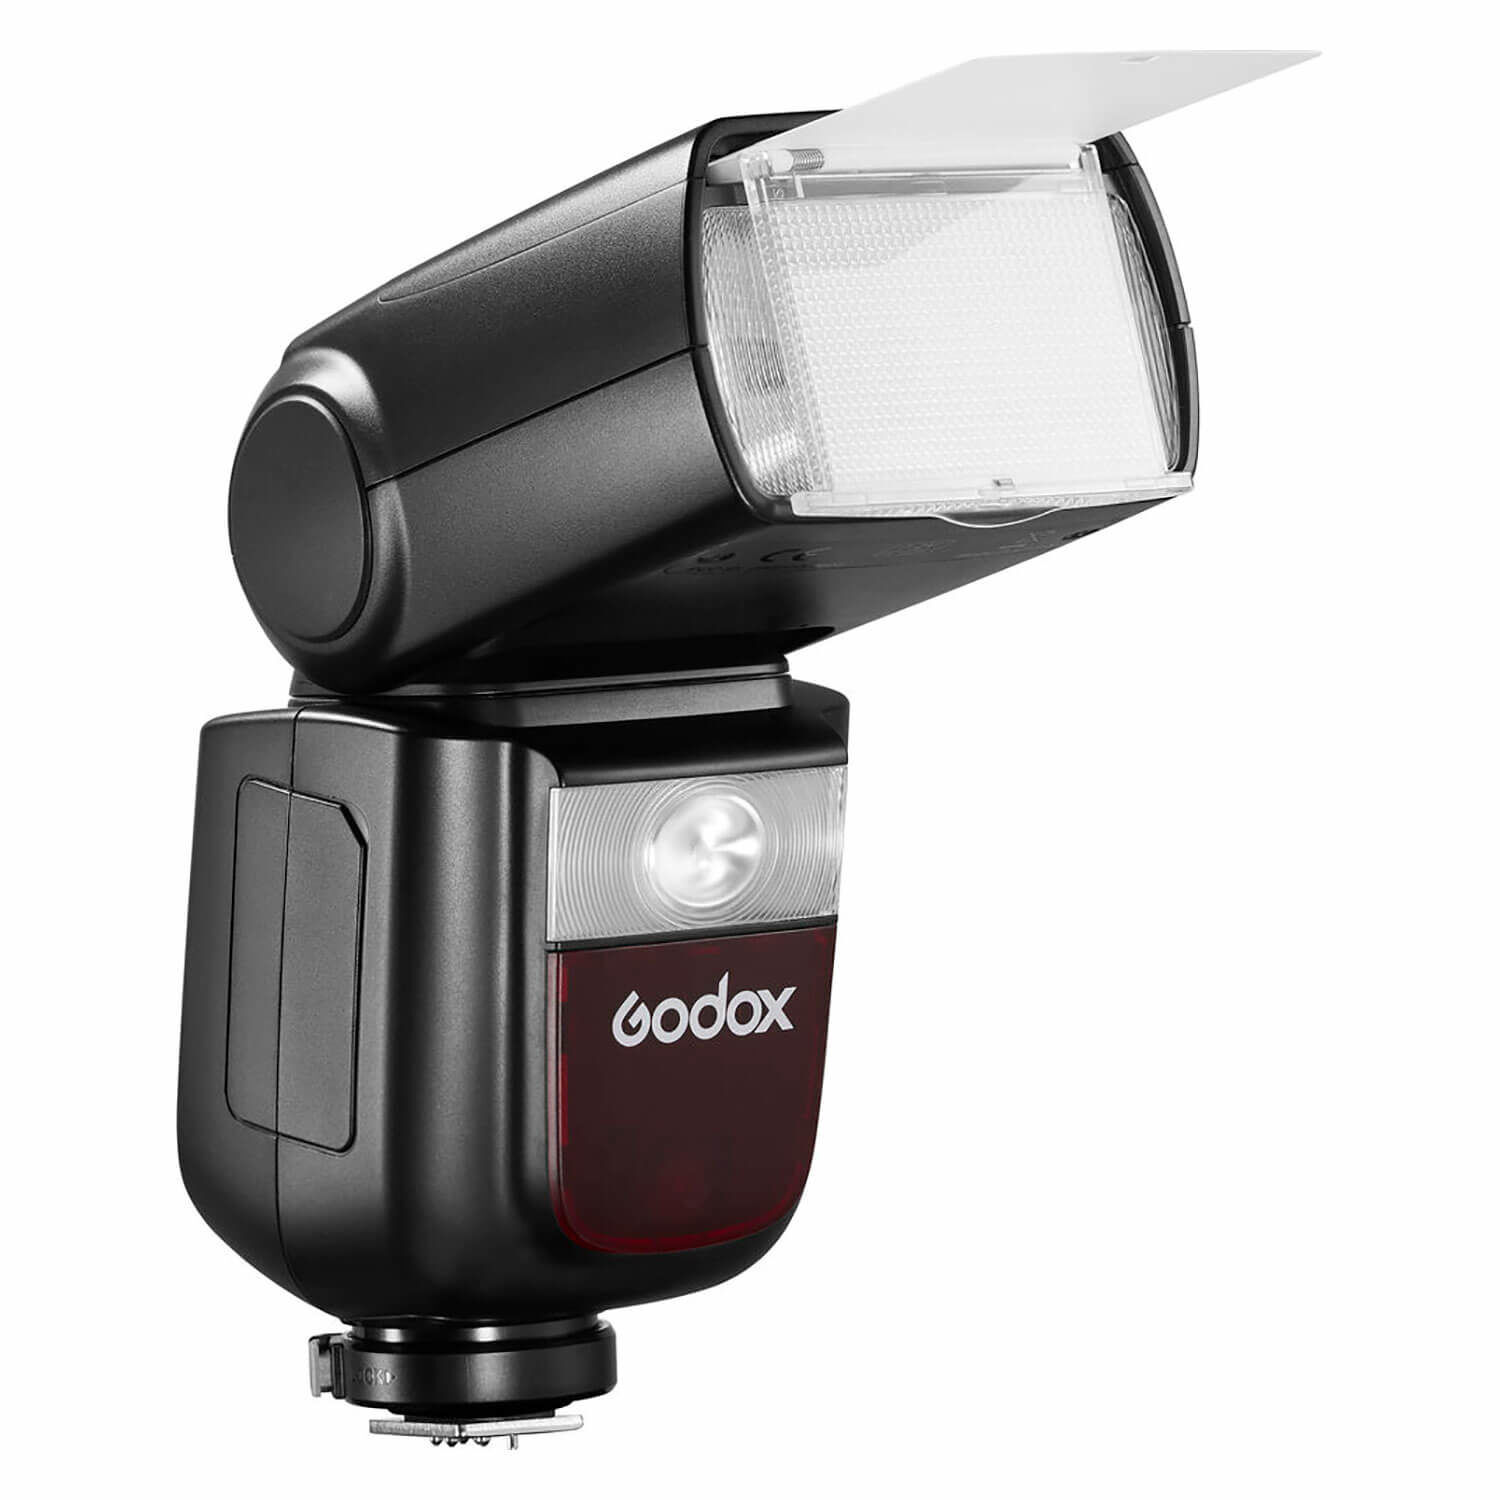 Godox Speedlite V860III Canon - Garanzia Europa 2 anni - (In magazzino)